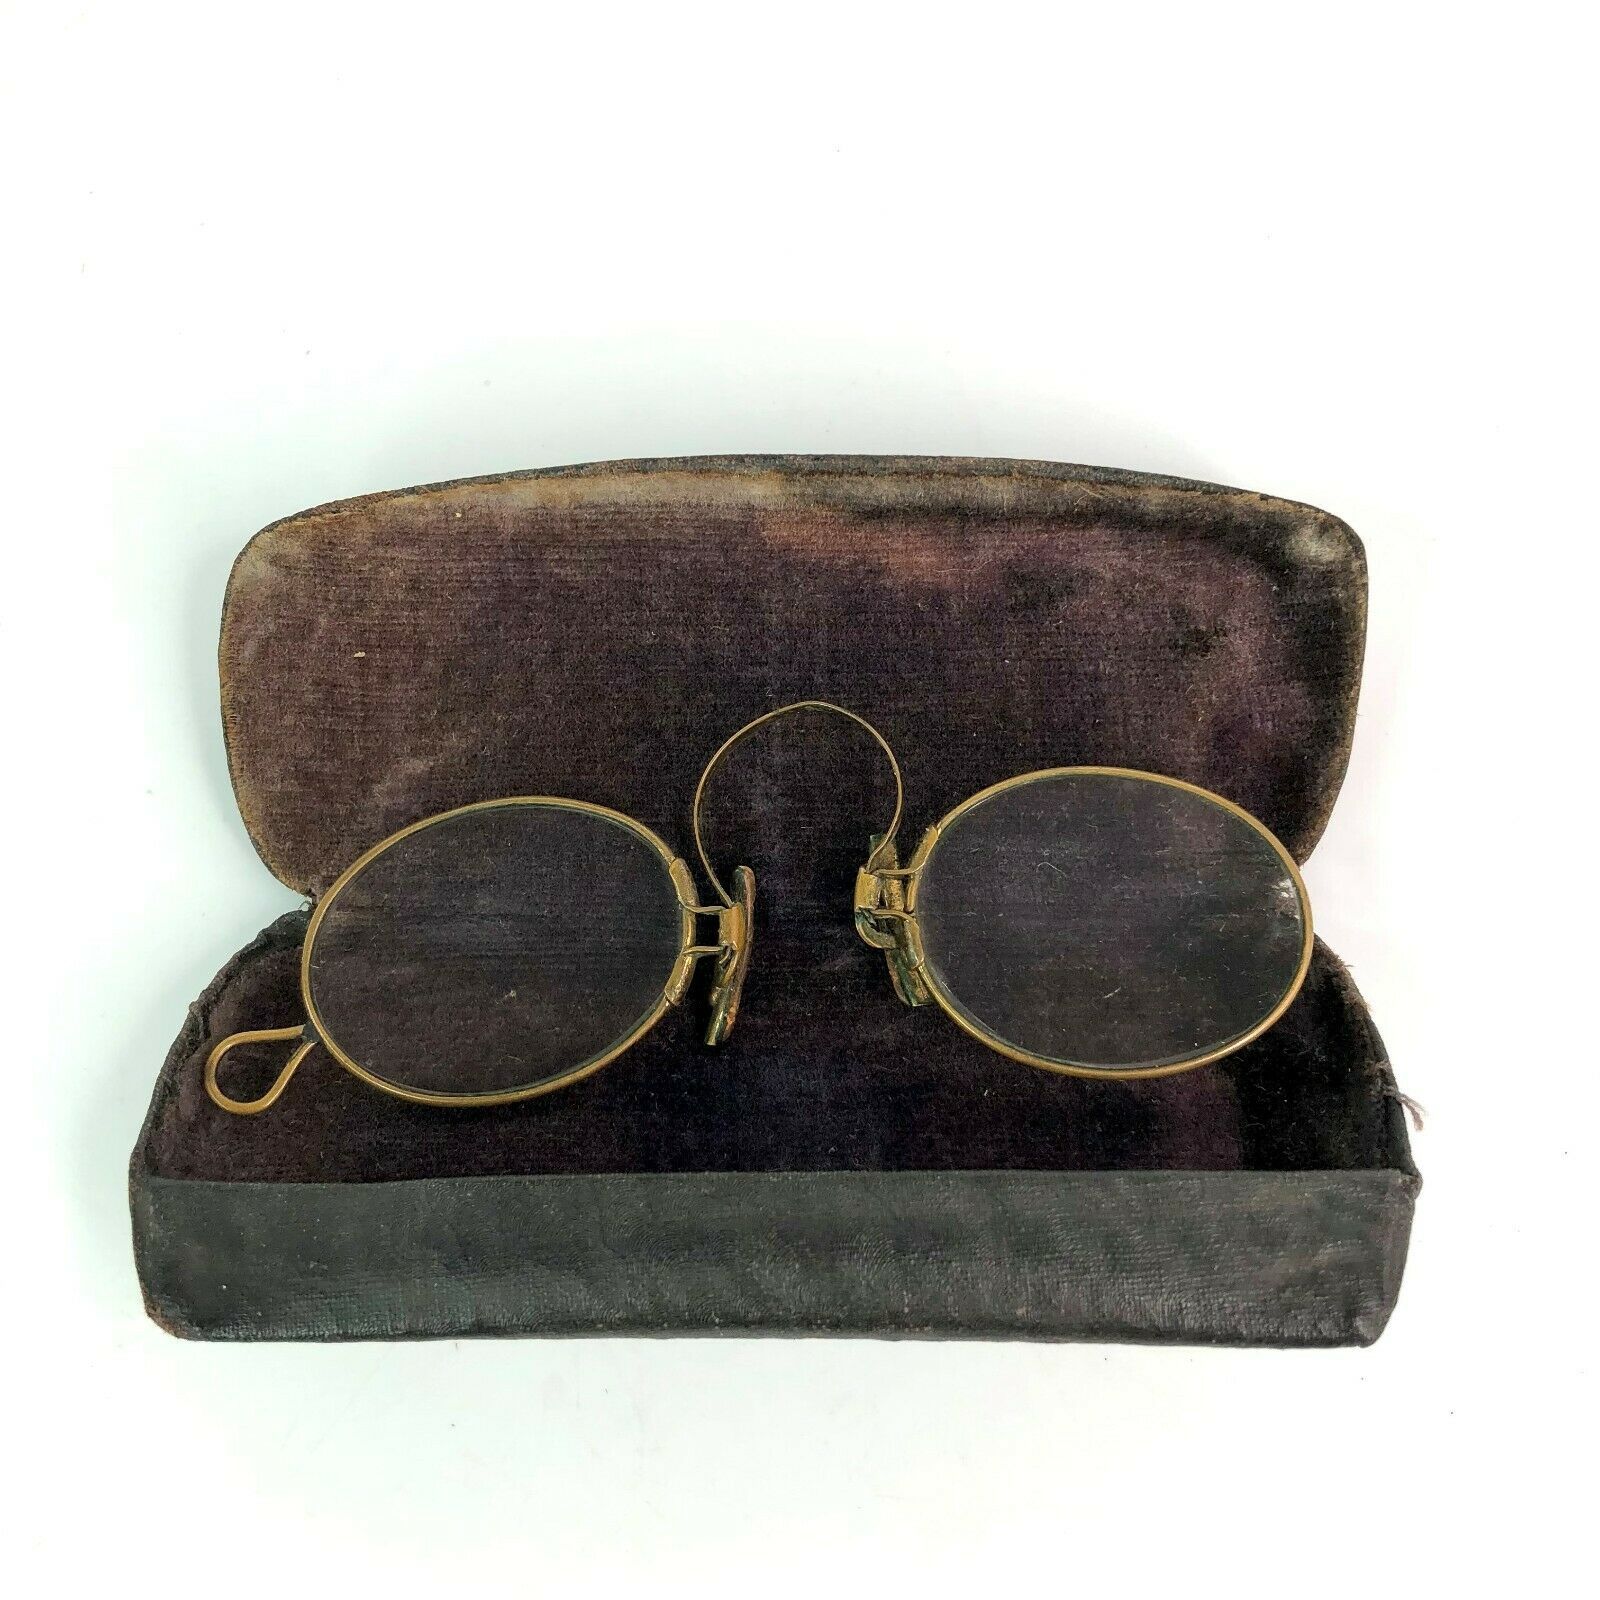 Accessories Sunglasses & Eyewear Reading Glasses antique oval lenses brass frame pince nez eye glasses 